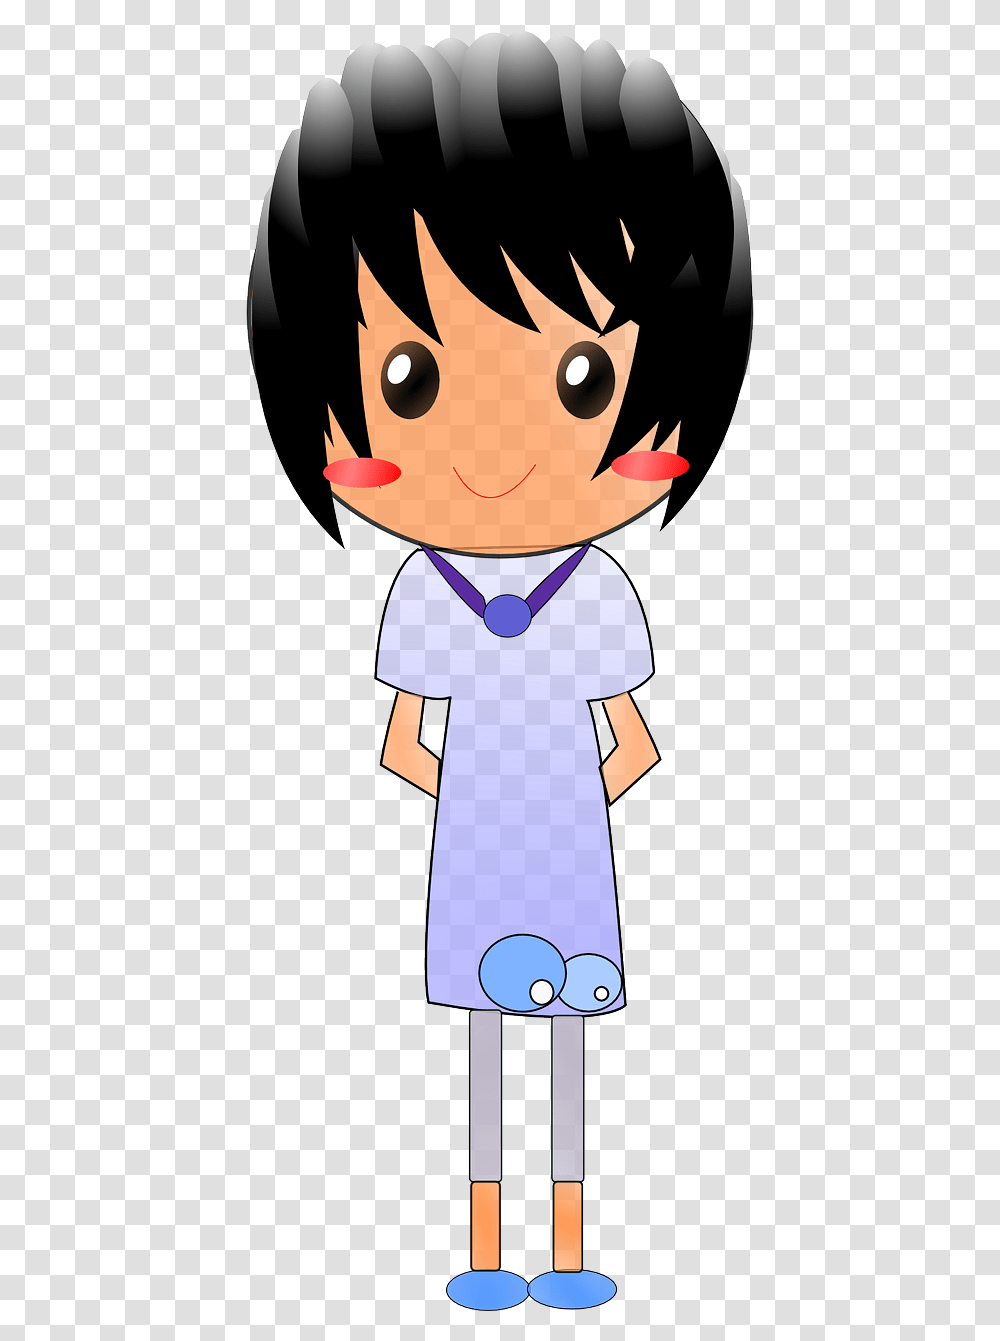 Girl Cute Shy Free Vector Graphic On Pixabay Con Pelo Largo Animado, Nurse, Toy, Sailor Suit, Graphics Transparent Png